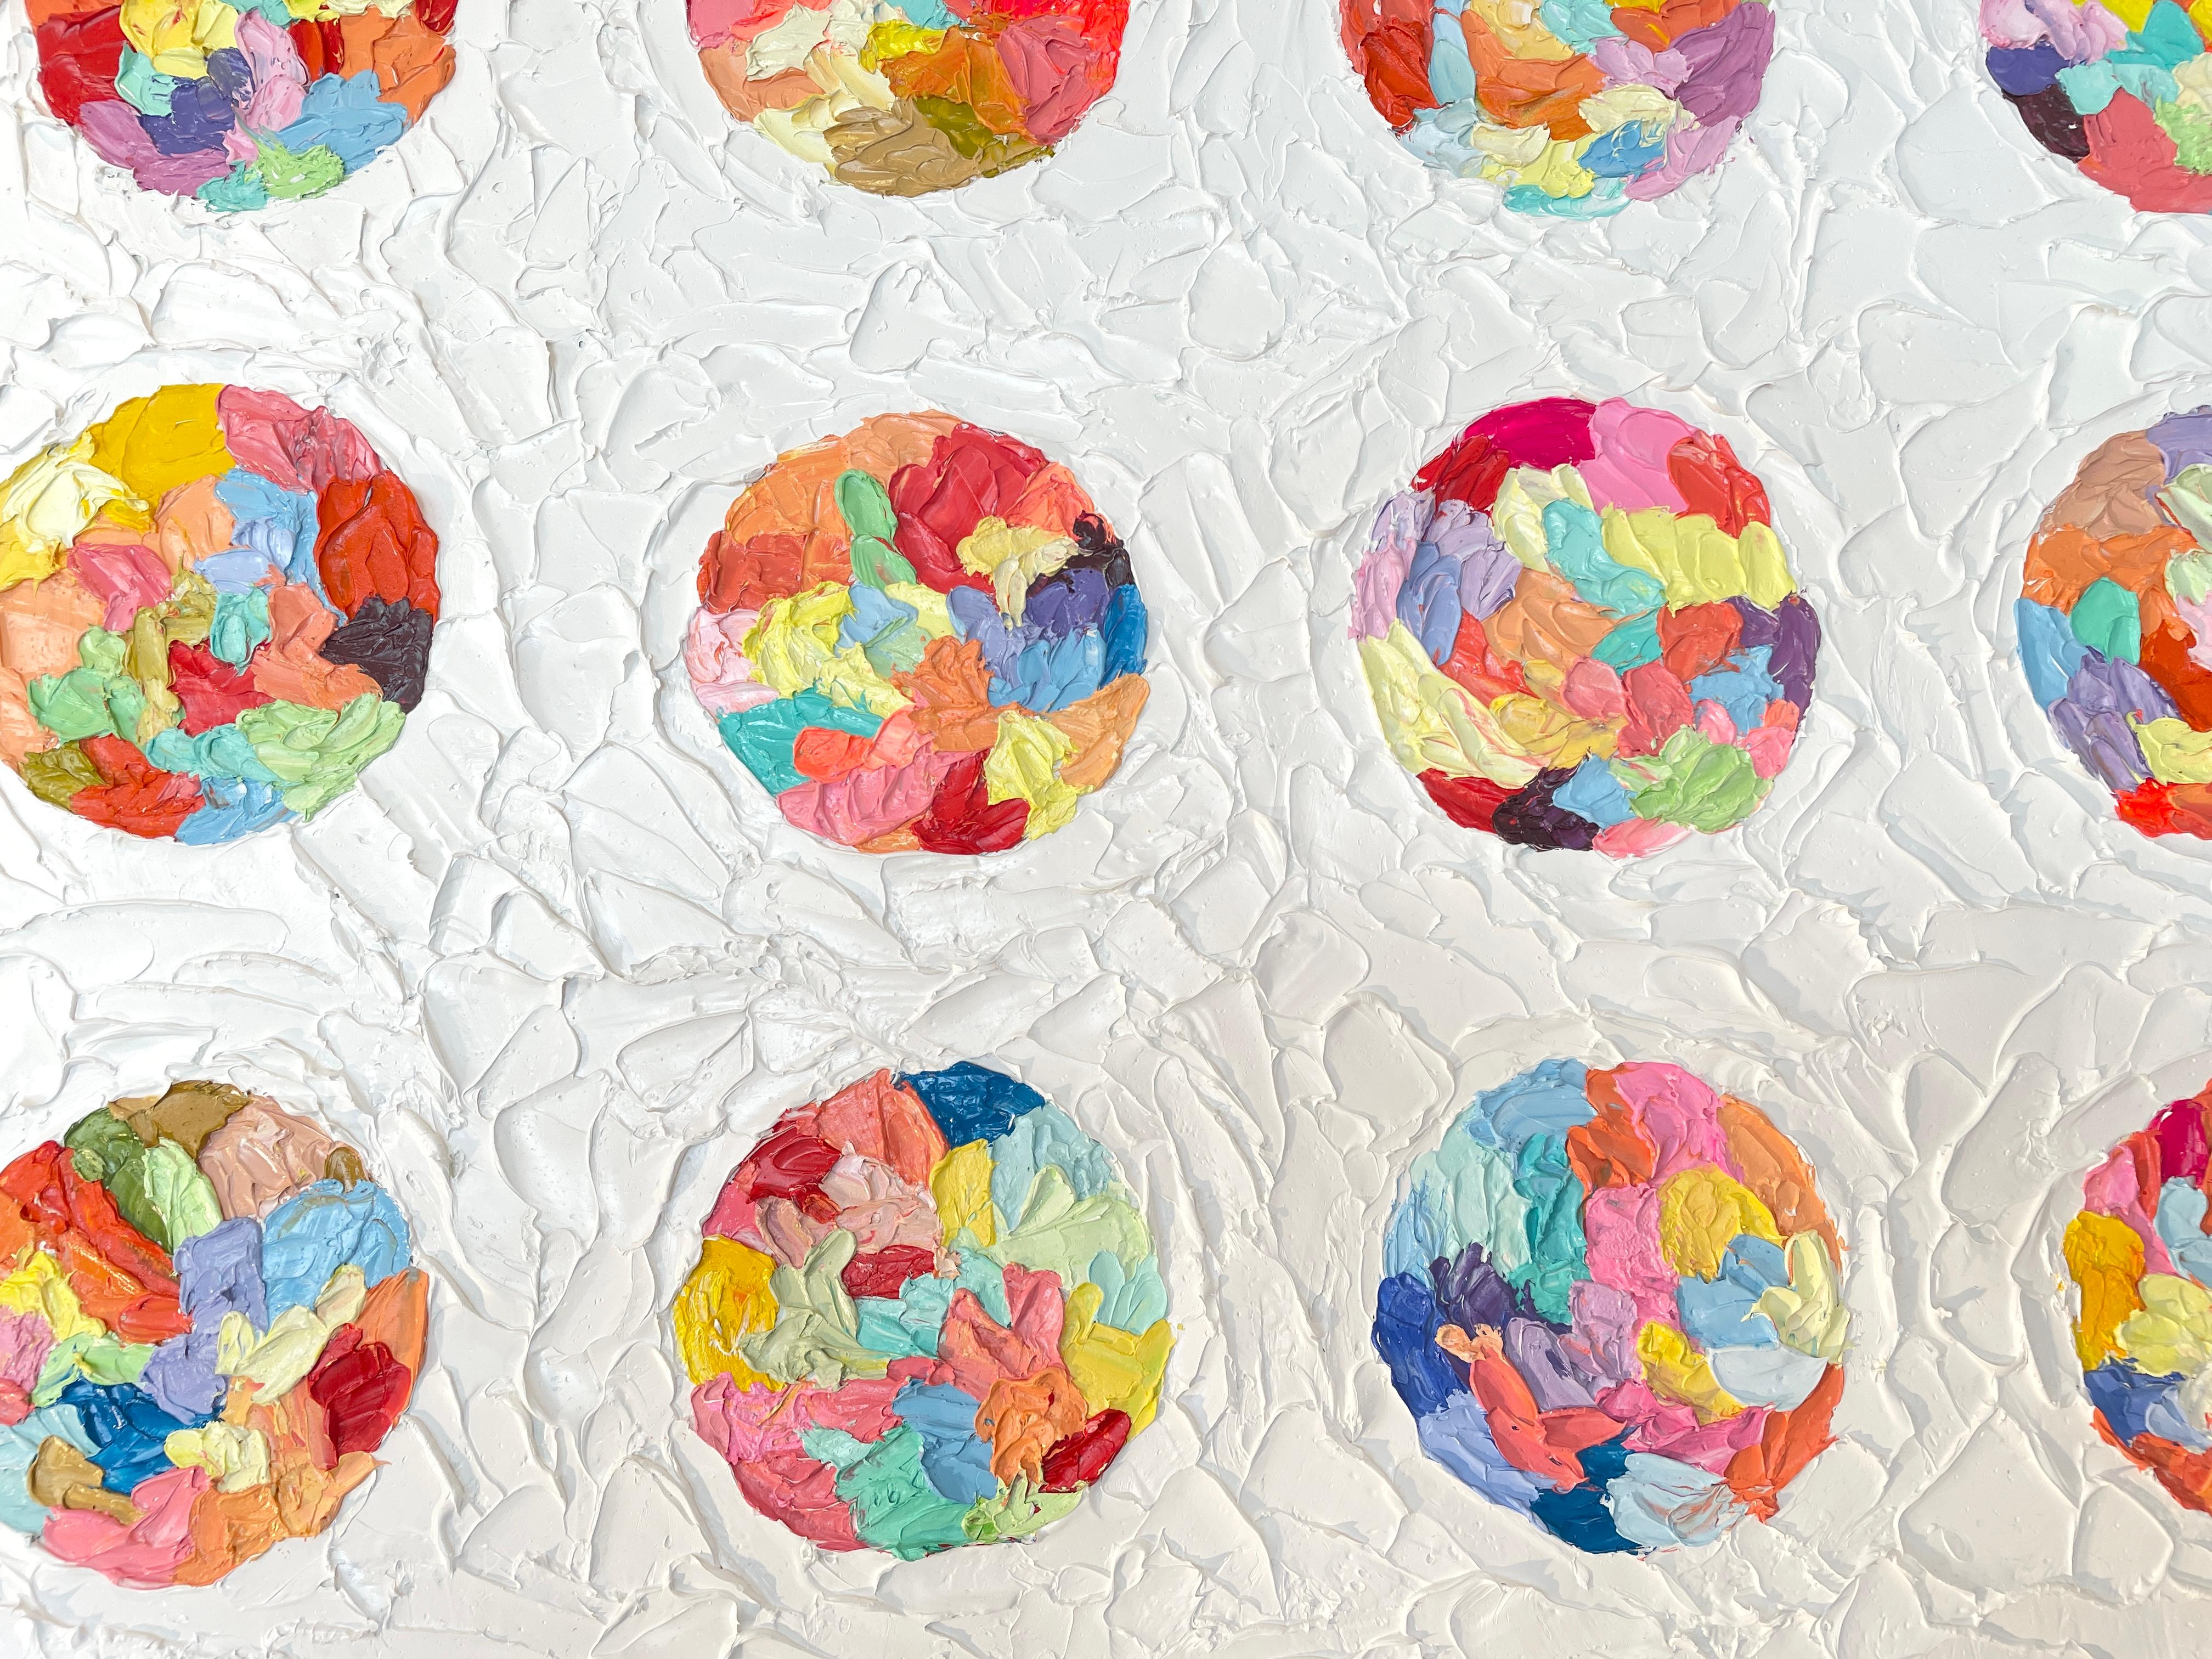 'Tropical Vibes 2' - Bright Textured Circles - Vibrant Abstract Expressionism - Abstract Expressionist Painting by Sveta Hessler